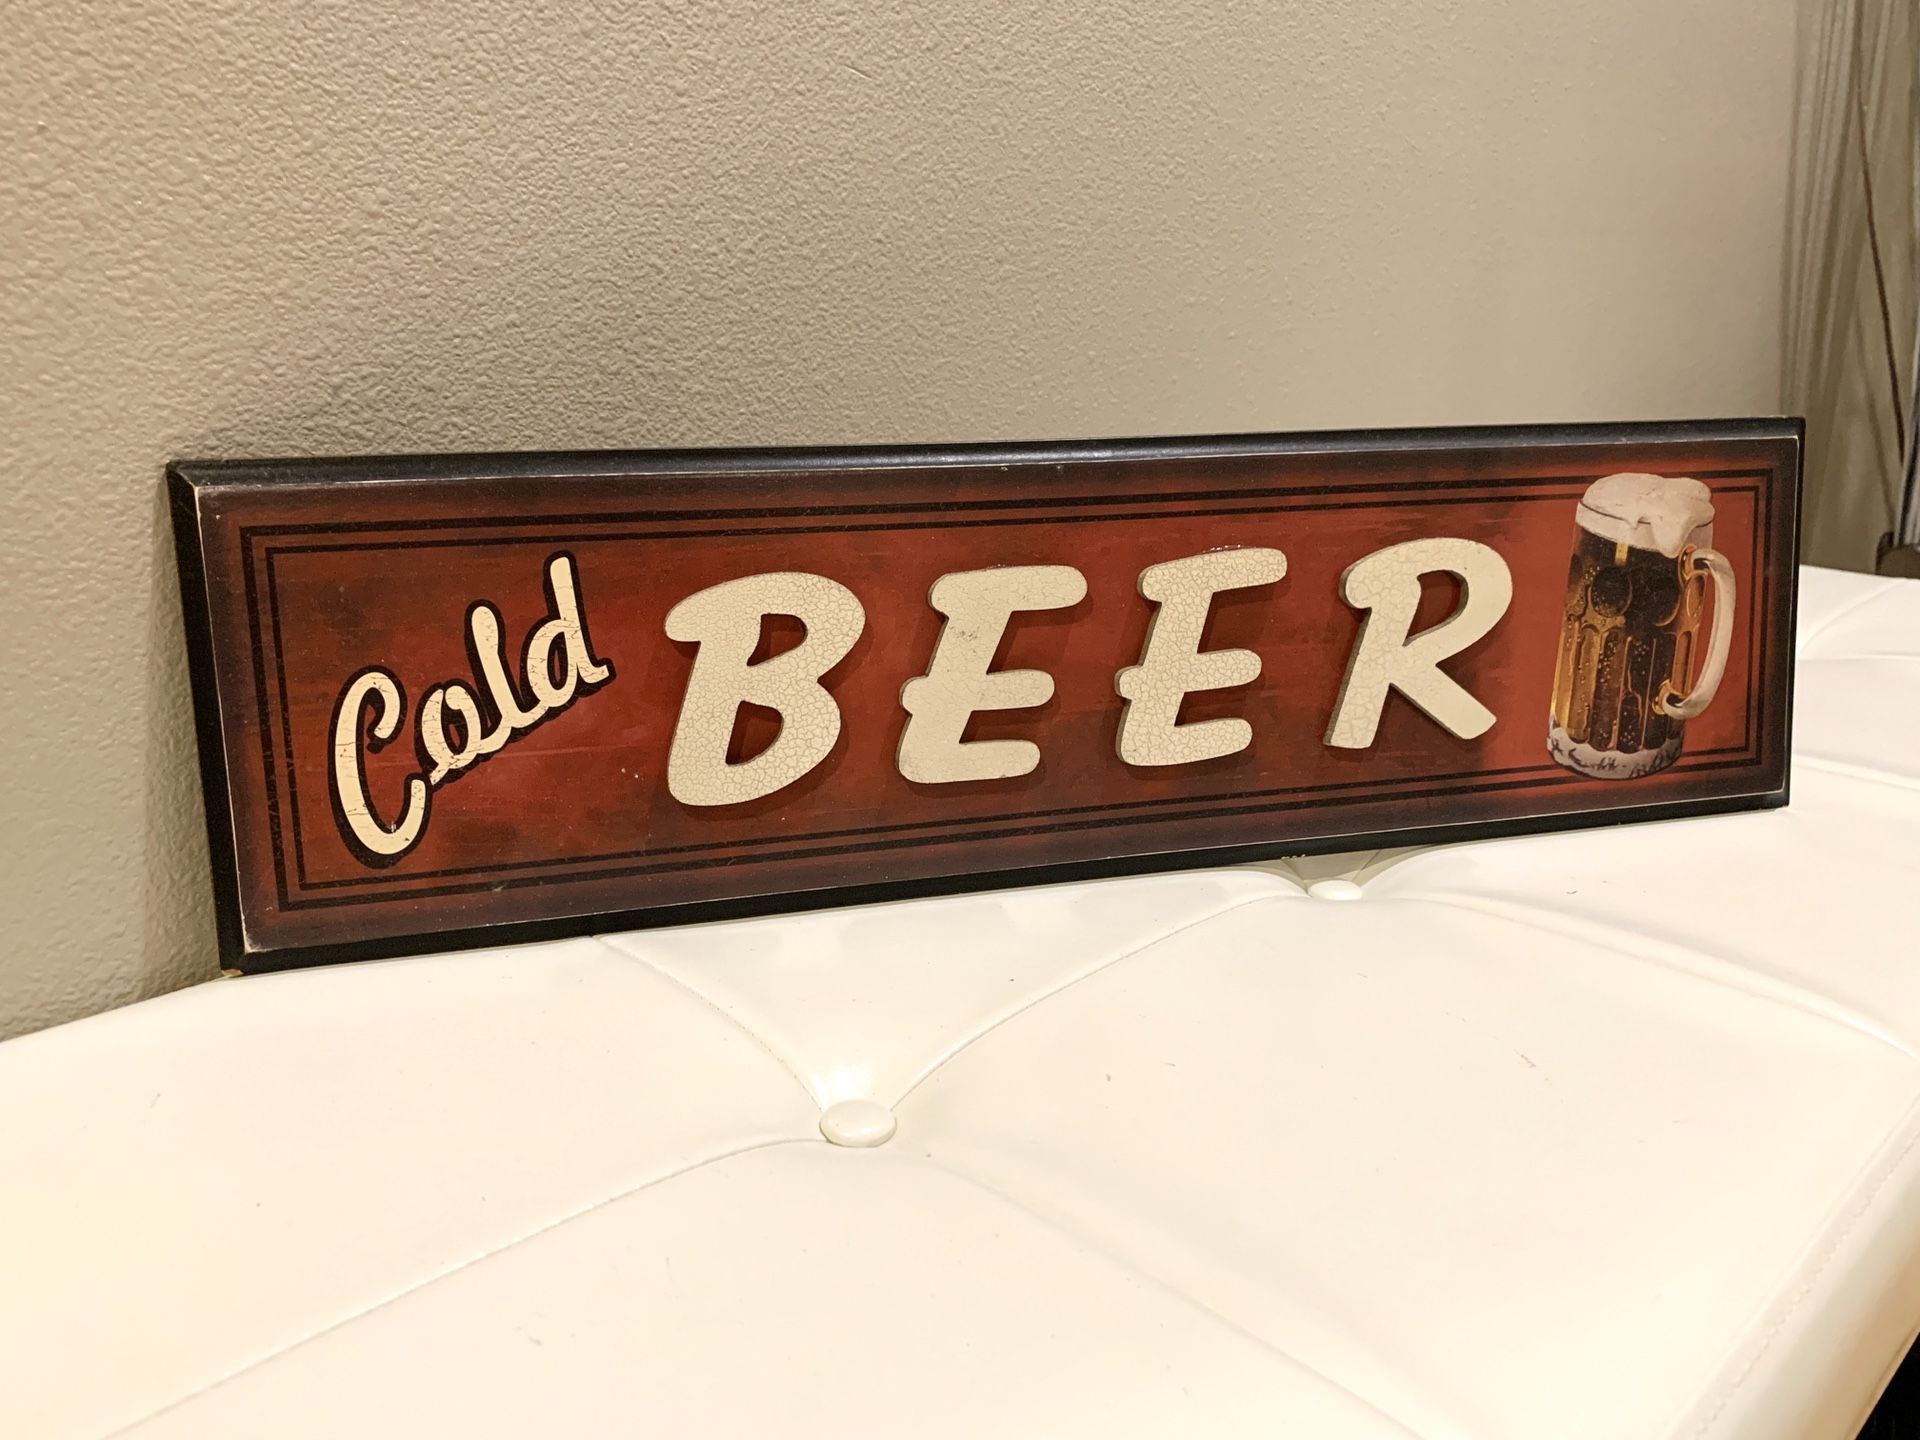 Vintage looking cold beer wood sign for man cave, she shed or kitchen bar